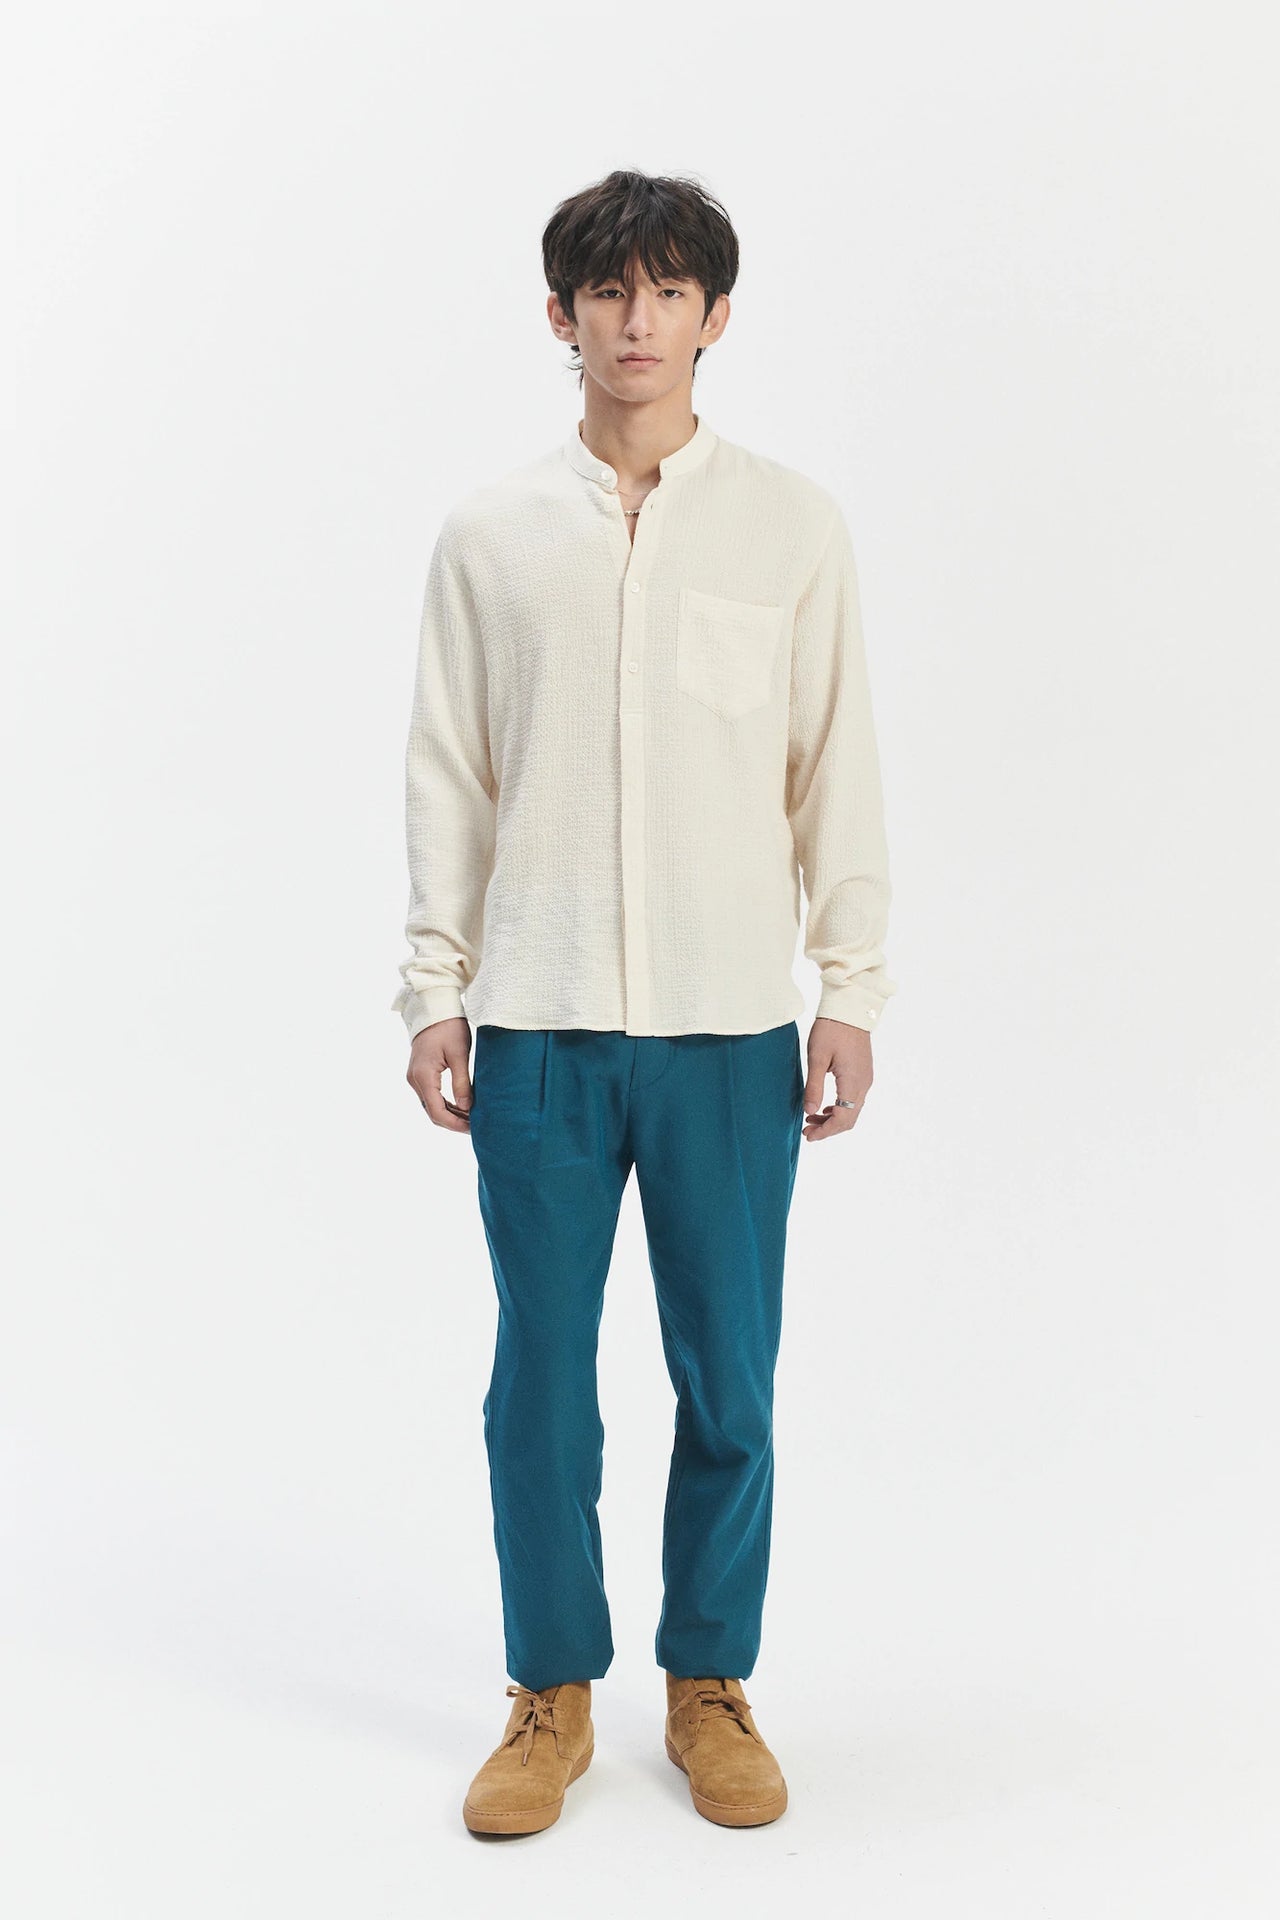 Zen Grandad Collar Shirt in the Finest Creamy White Portuguese Cashmere and Cotton Seersucker